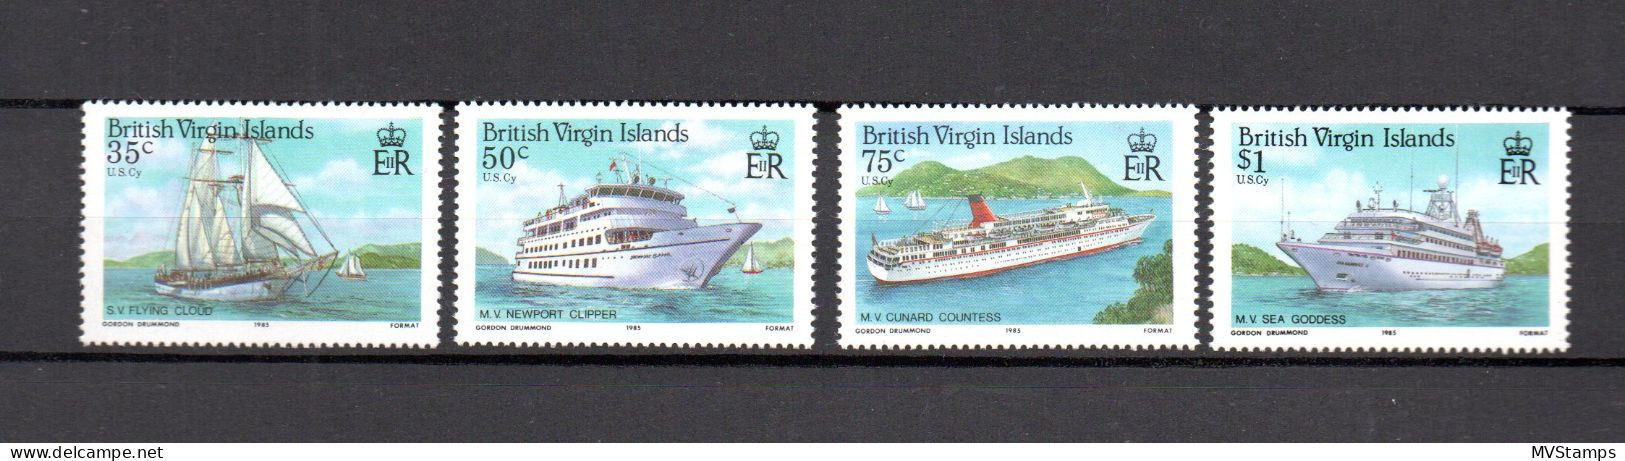 Virgin Islands 1986 Set Ships/boat/Schiffe Stamps (Michel 537/40) MNH - British Virgin Islands